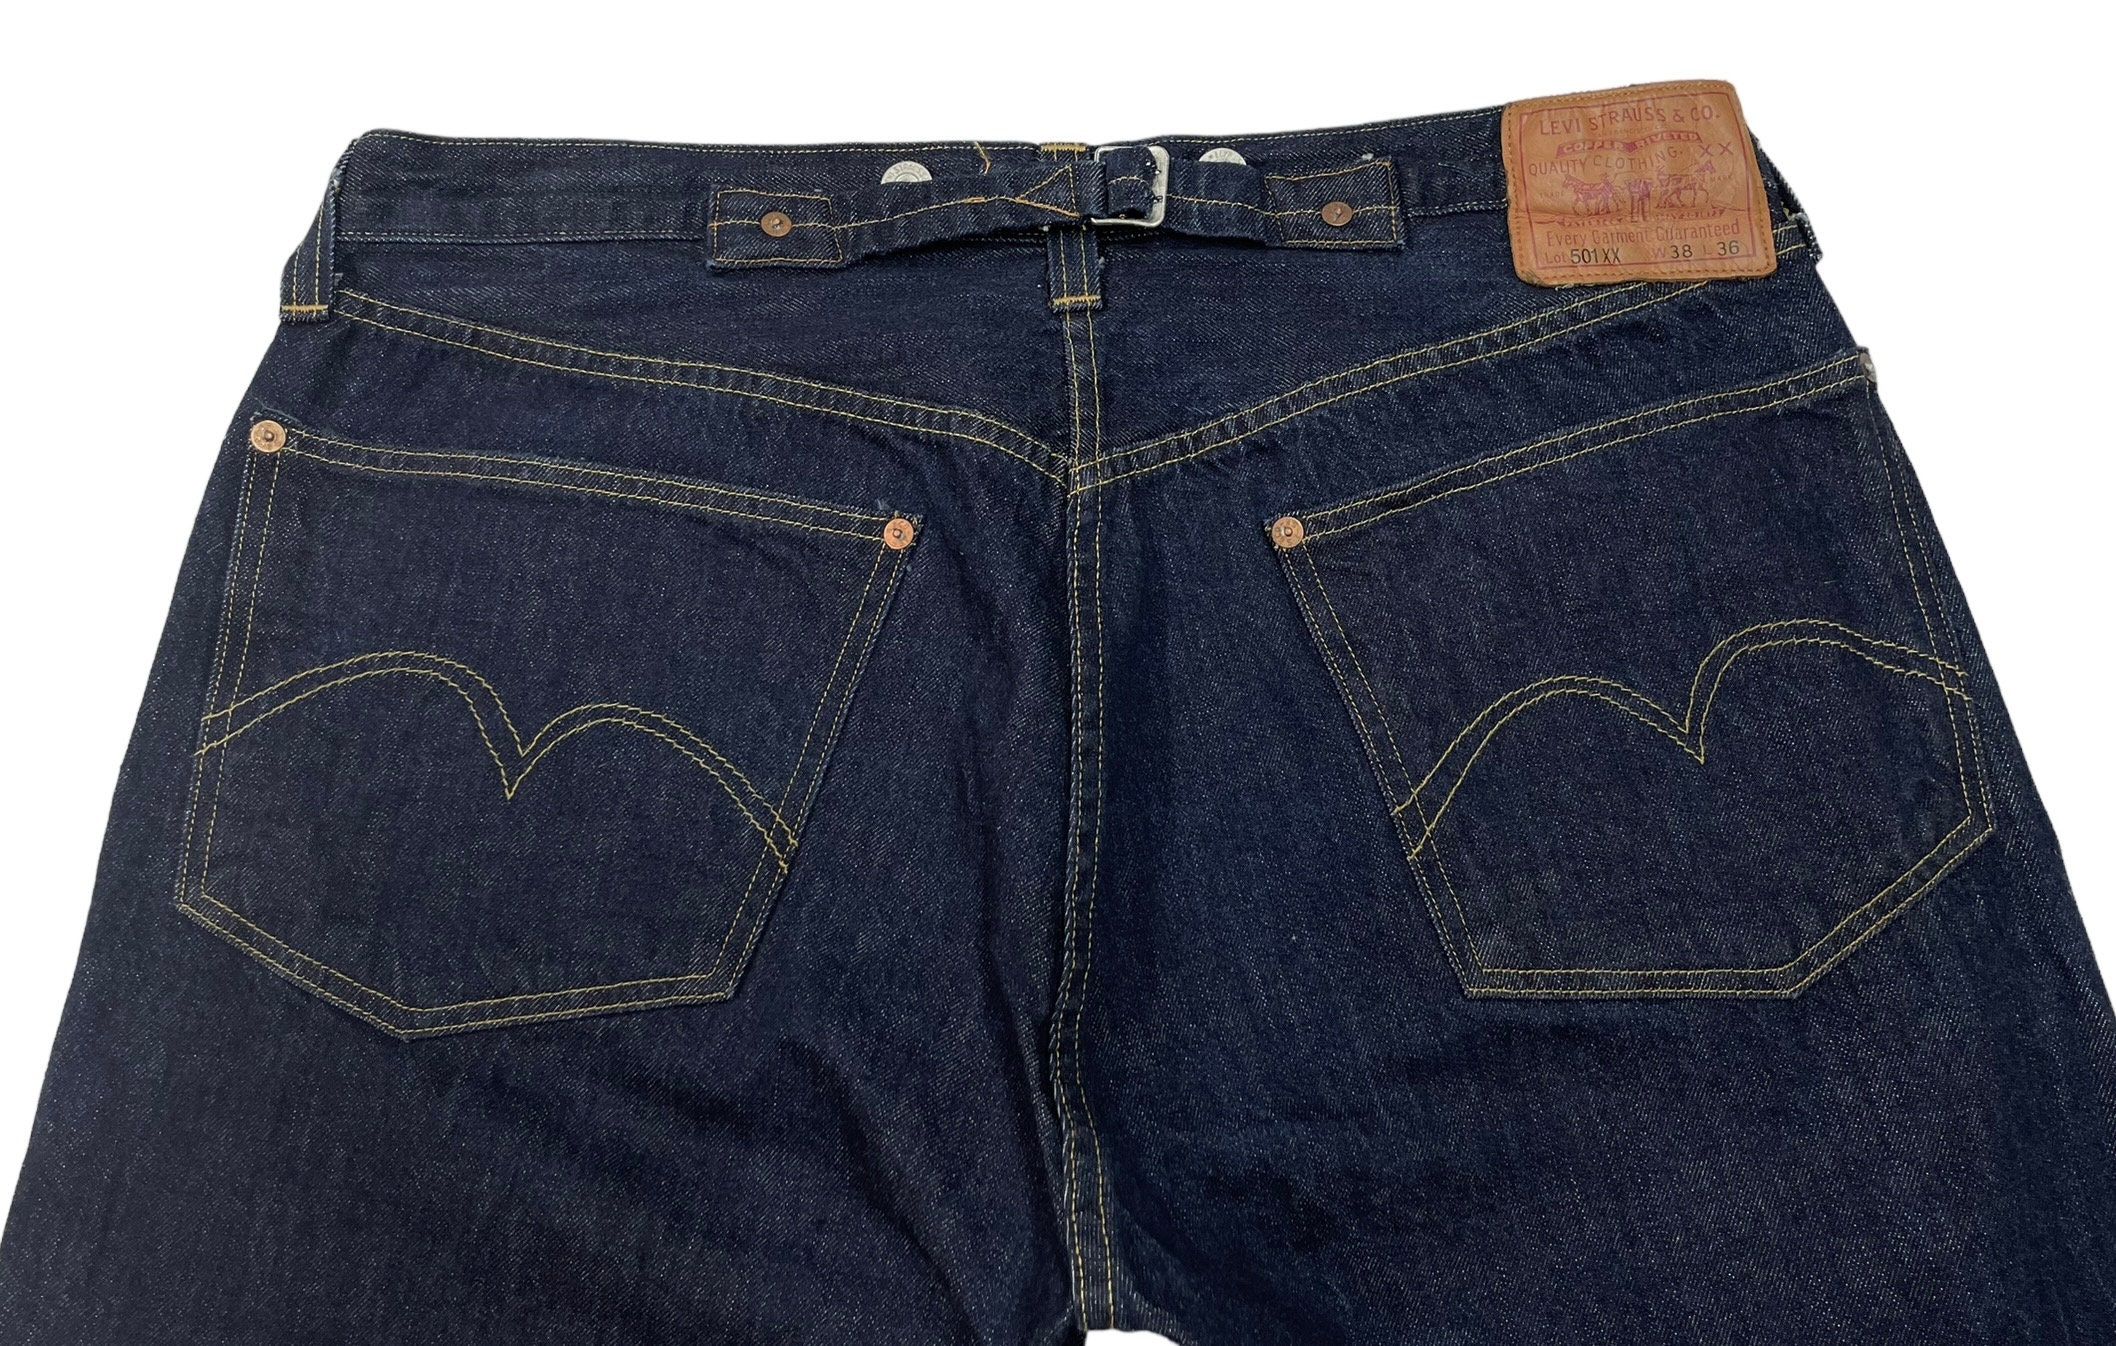 LVC Levi’s Vintage Clothing 501XX 1933 Cinch Back Selvedge Denim Jeans  34X34 USA